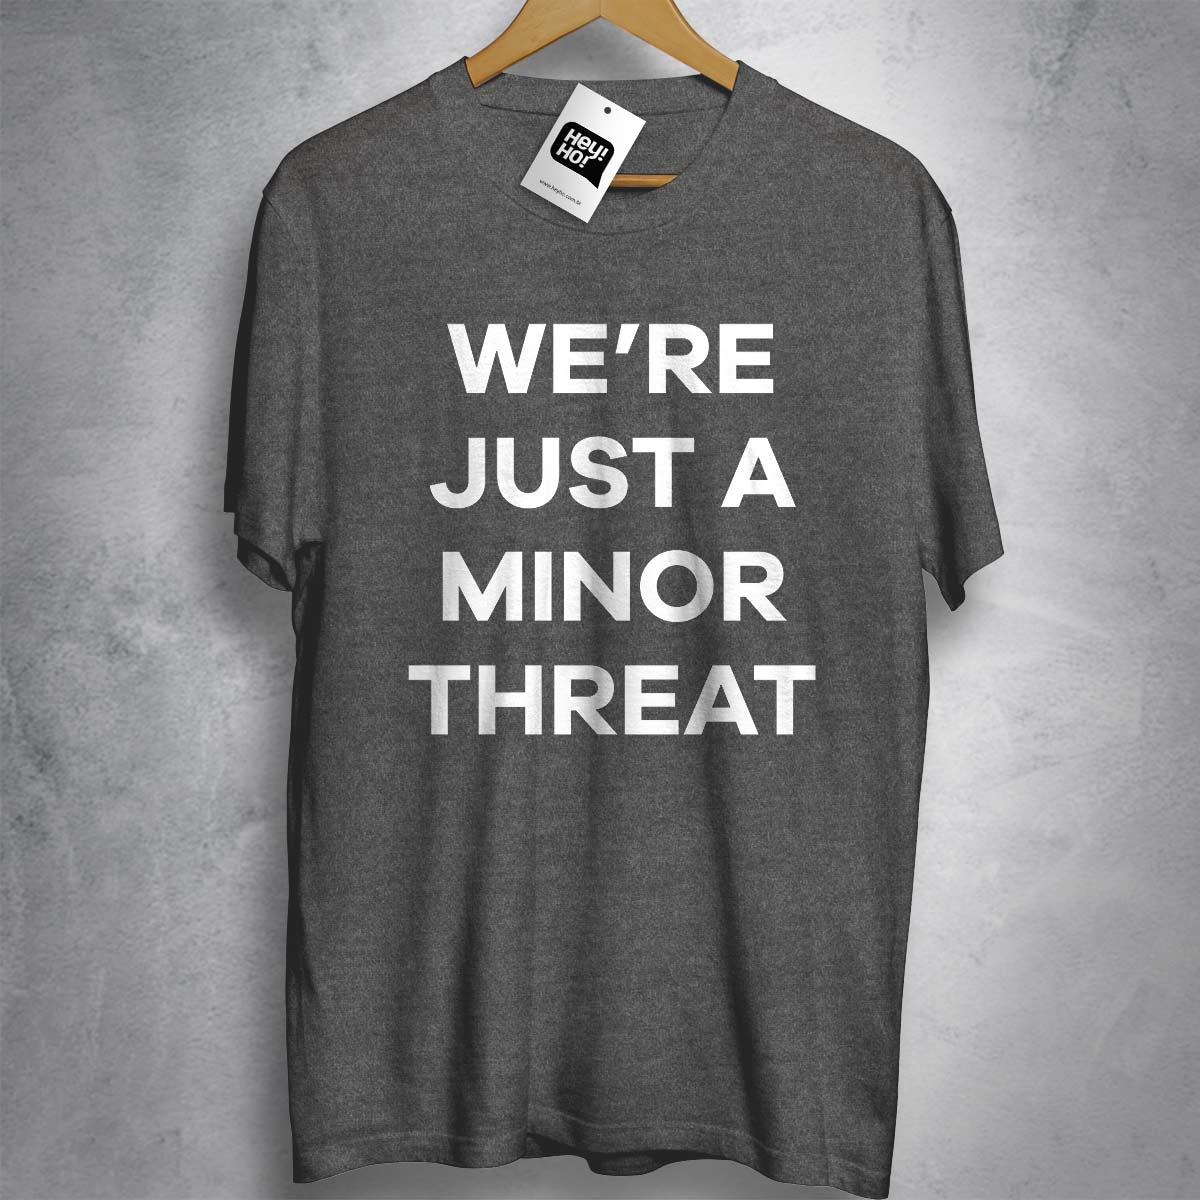 MINOR THREAT - We're just a minor threat